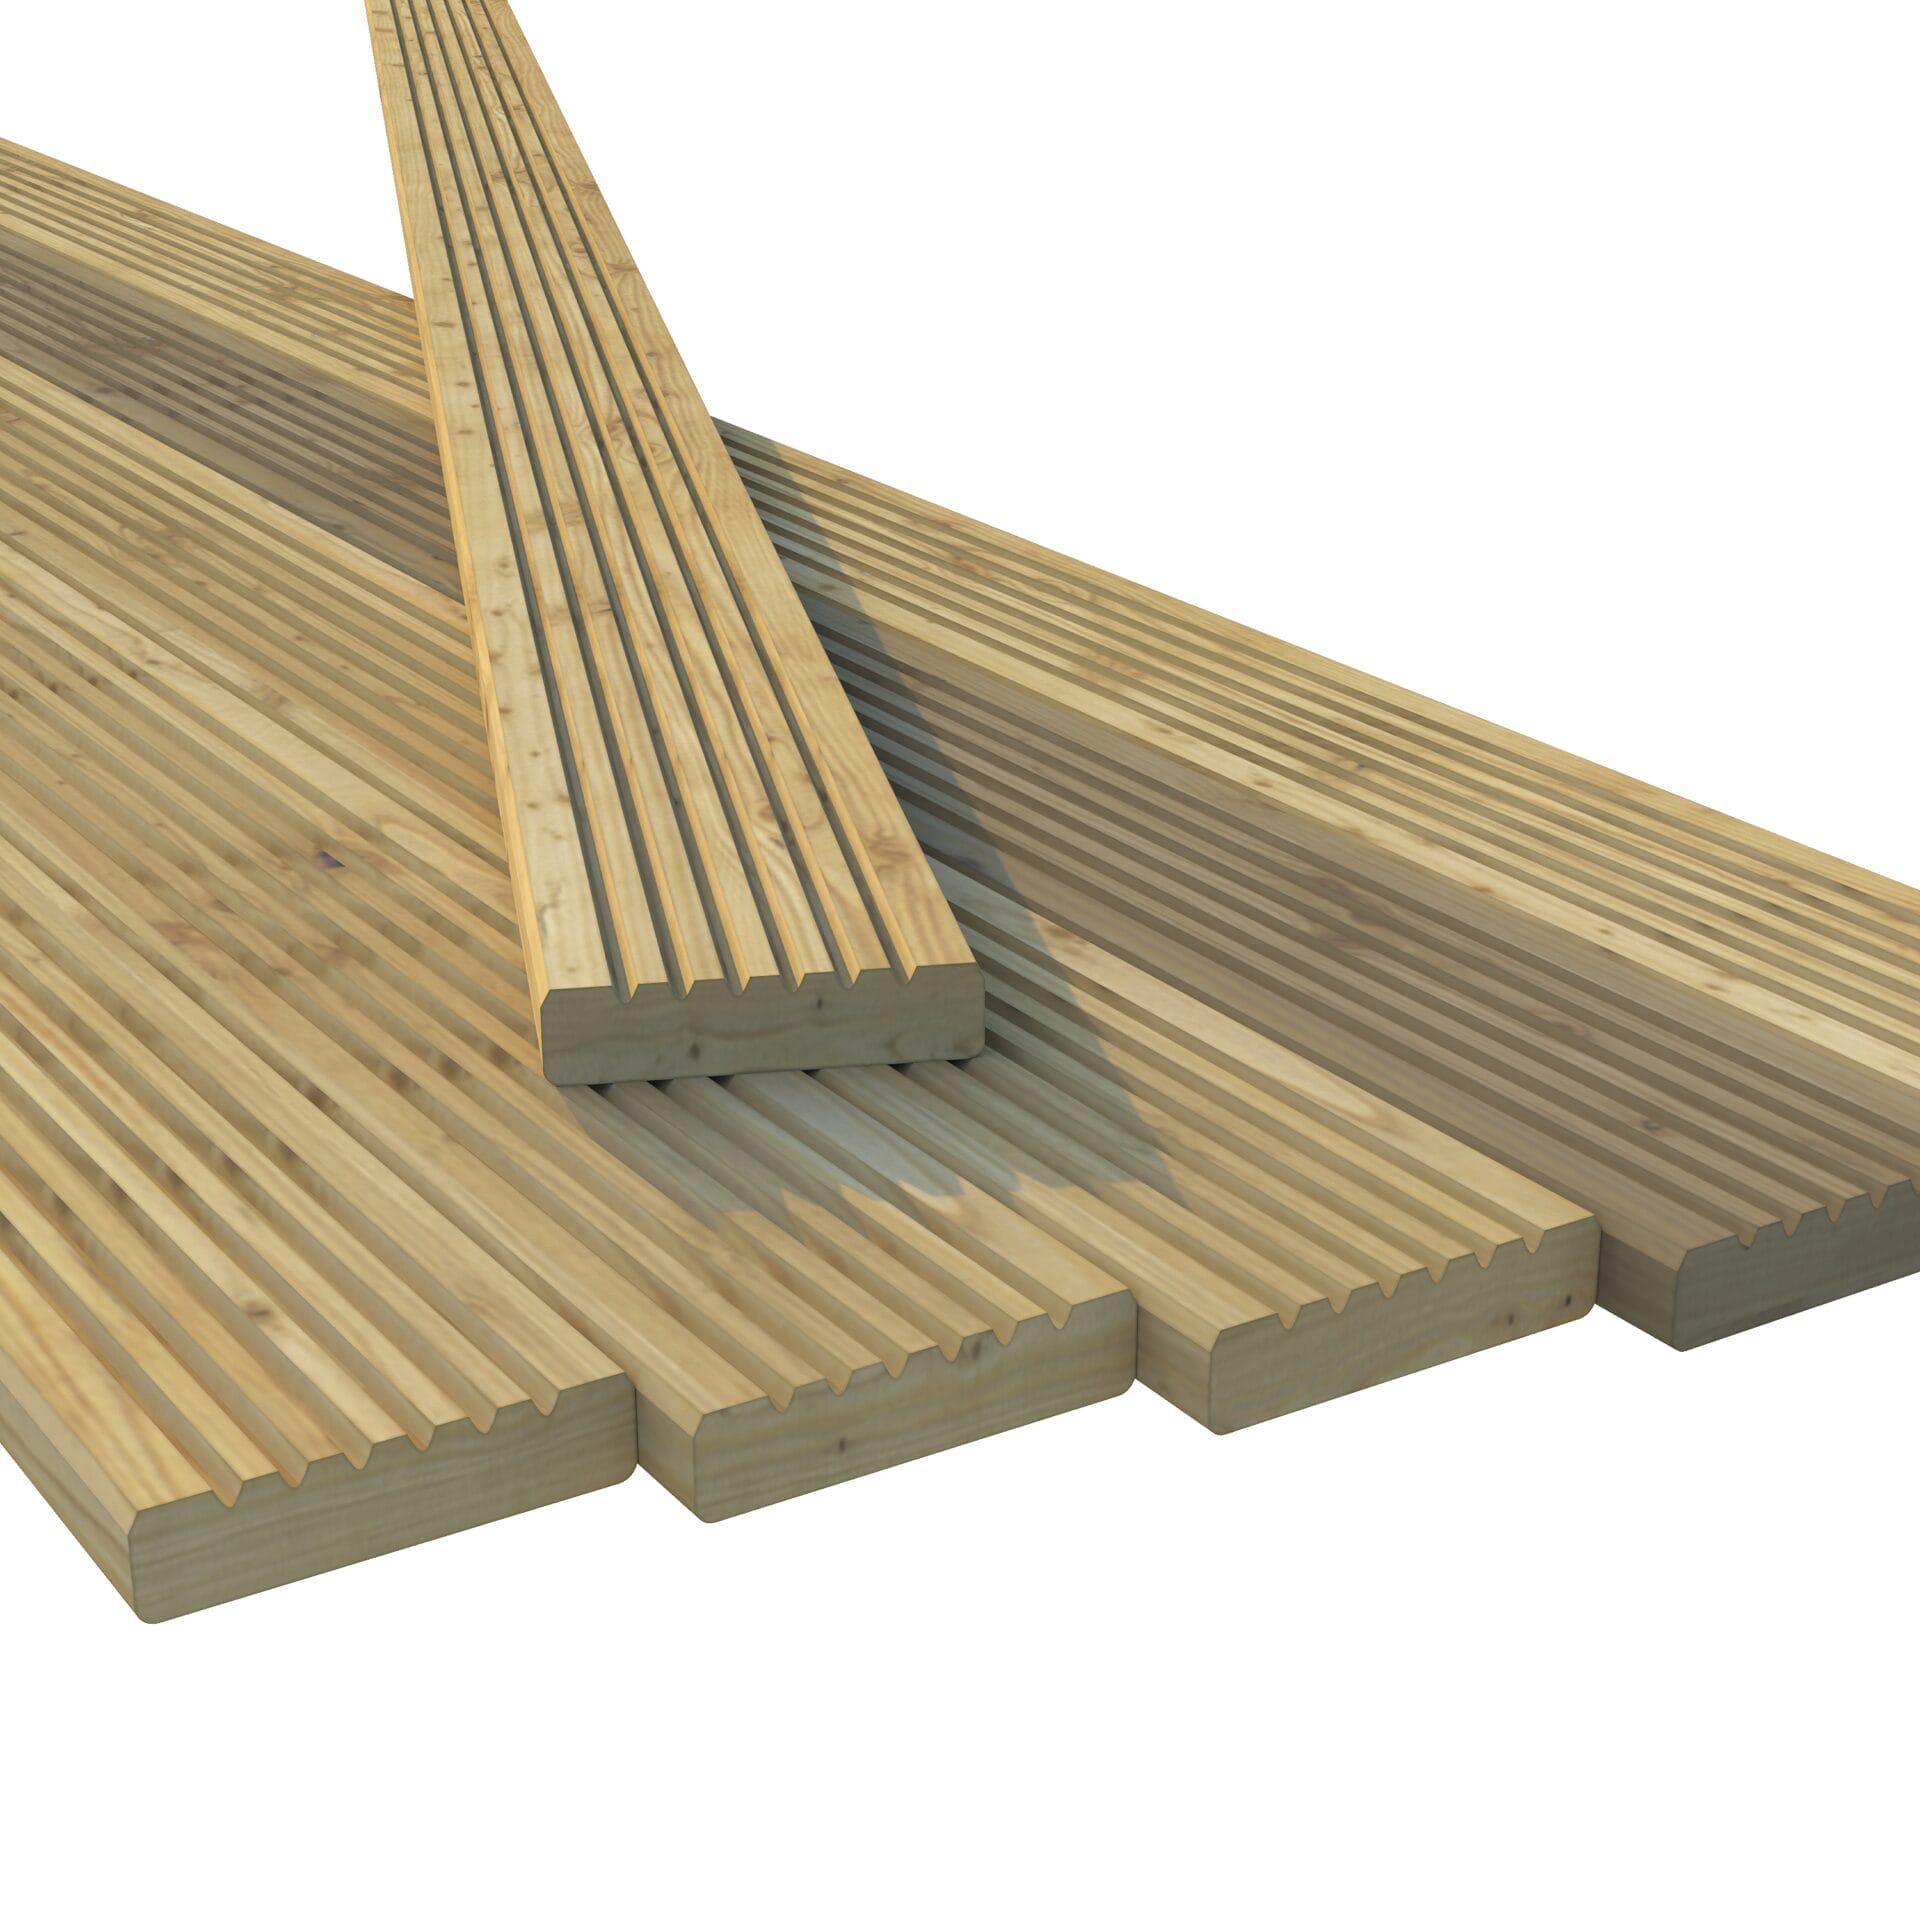 28mm Wooden Decking Boards Power